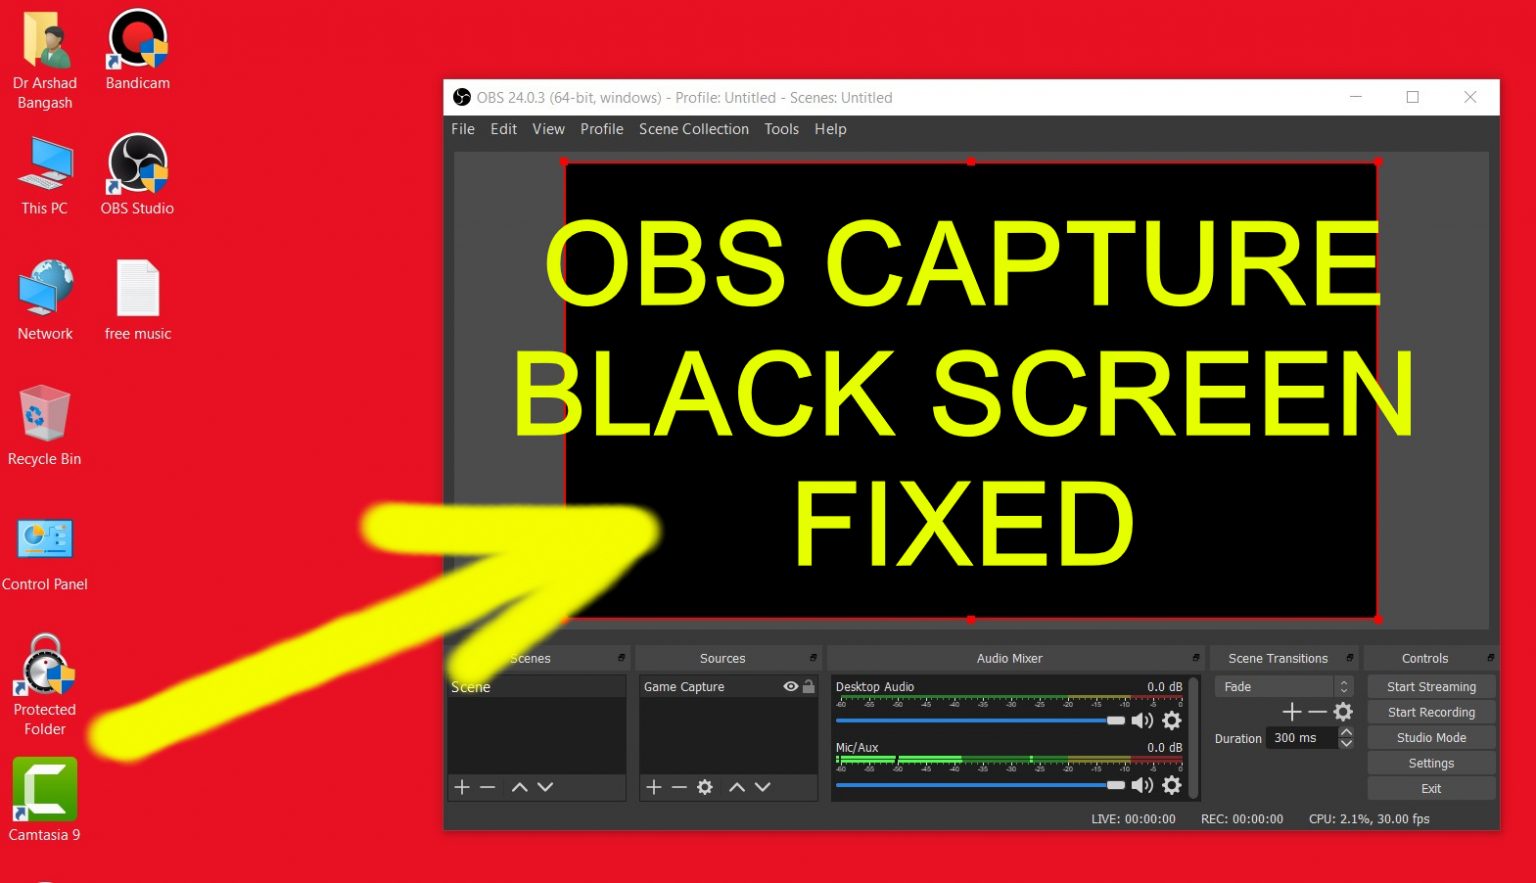 streamlabs obs window capture black screen